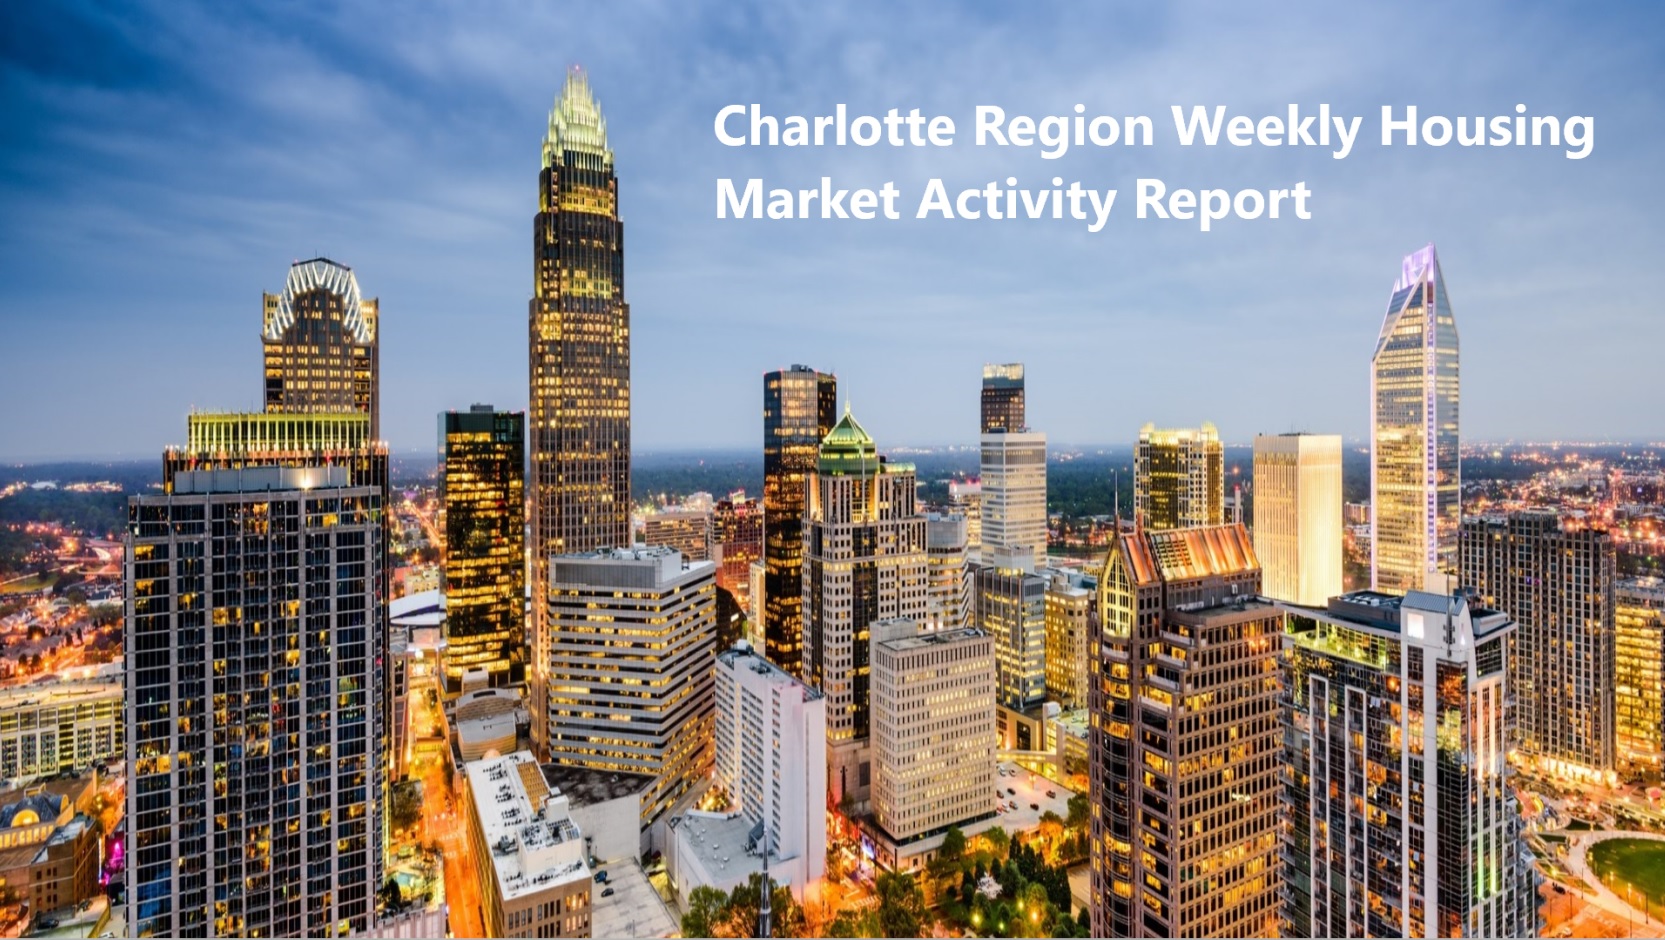 Charlotte_Region_Weekly_Housing_Market_Report_Banner.jpg